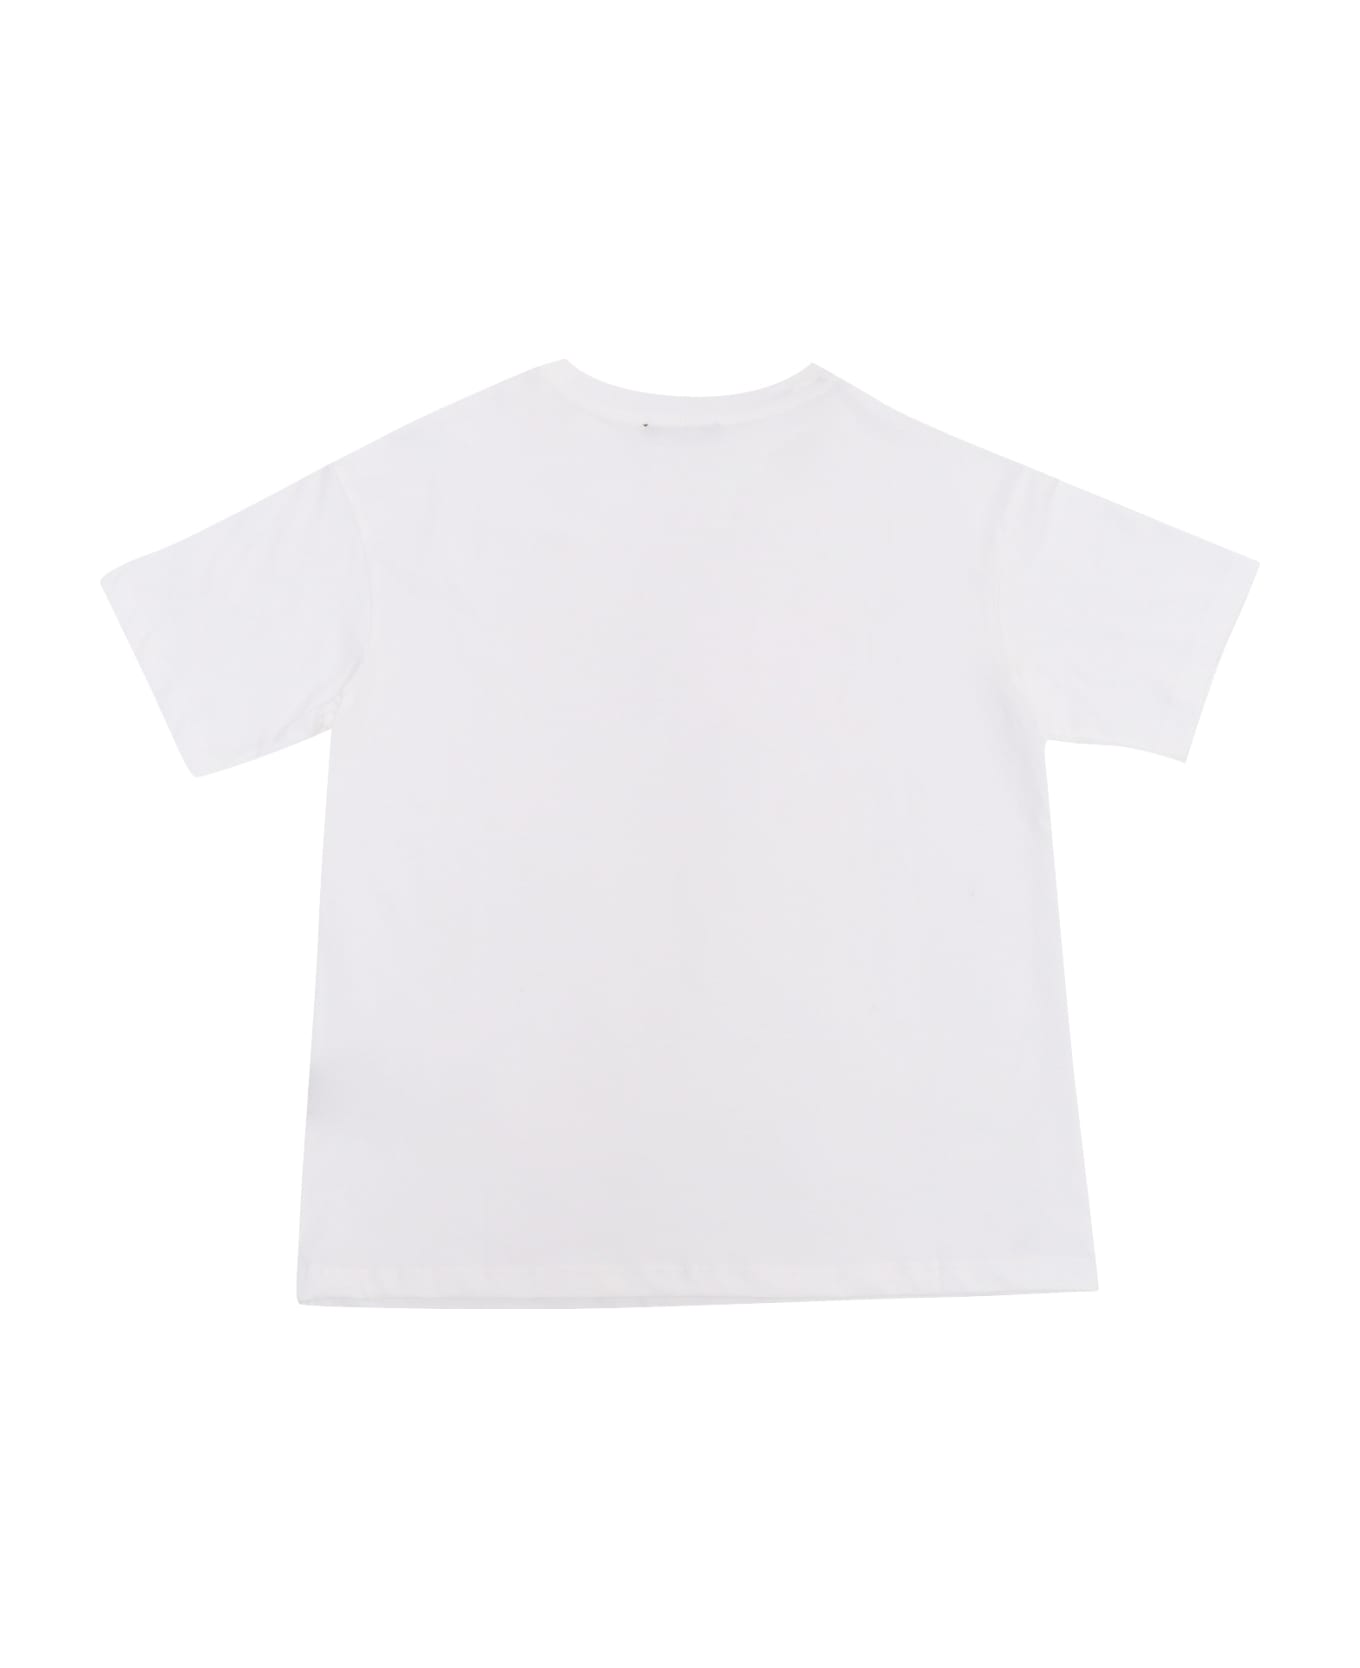 Balmain White T-shirt With Logo - WHITE Tシャツ＆ポロシャツ